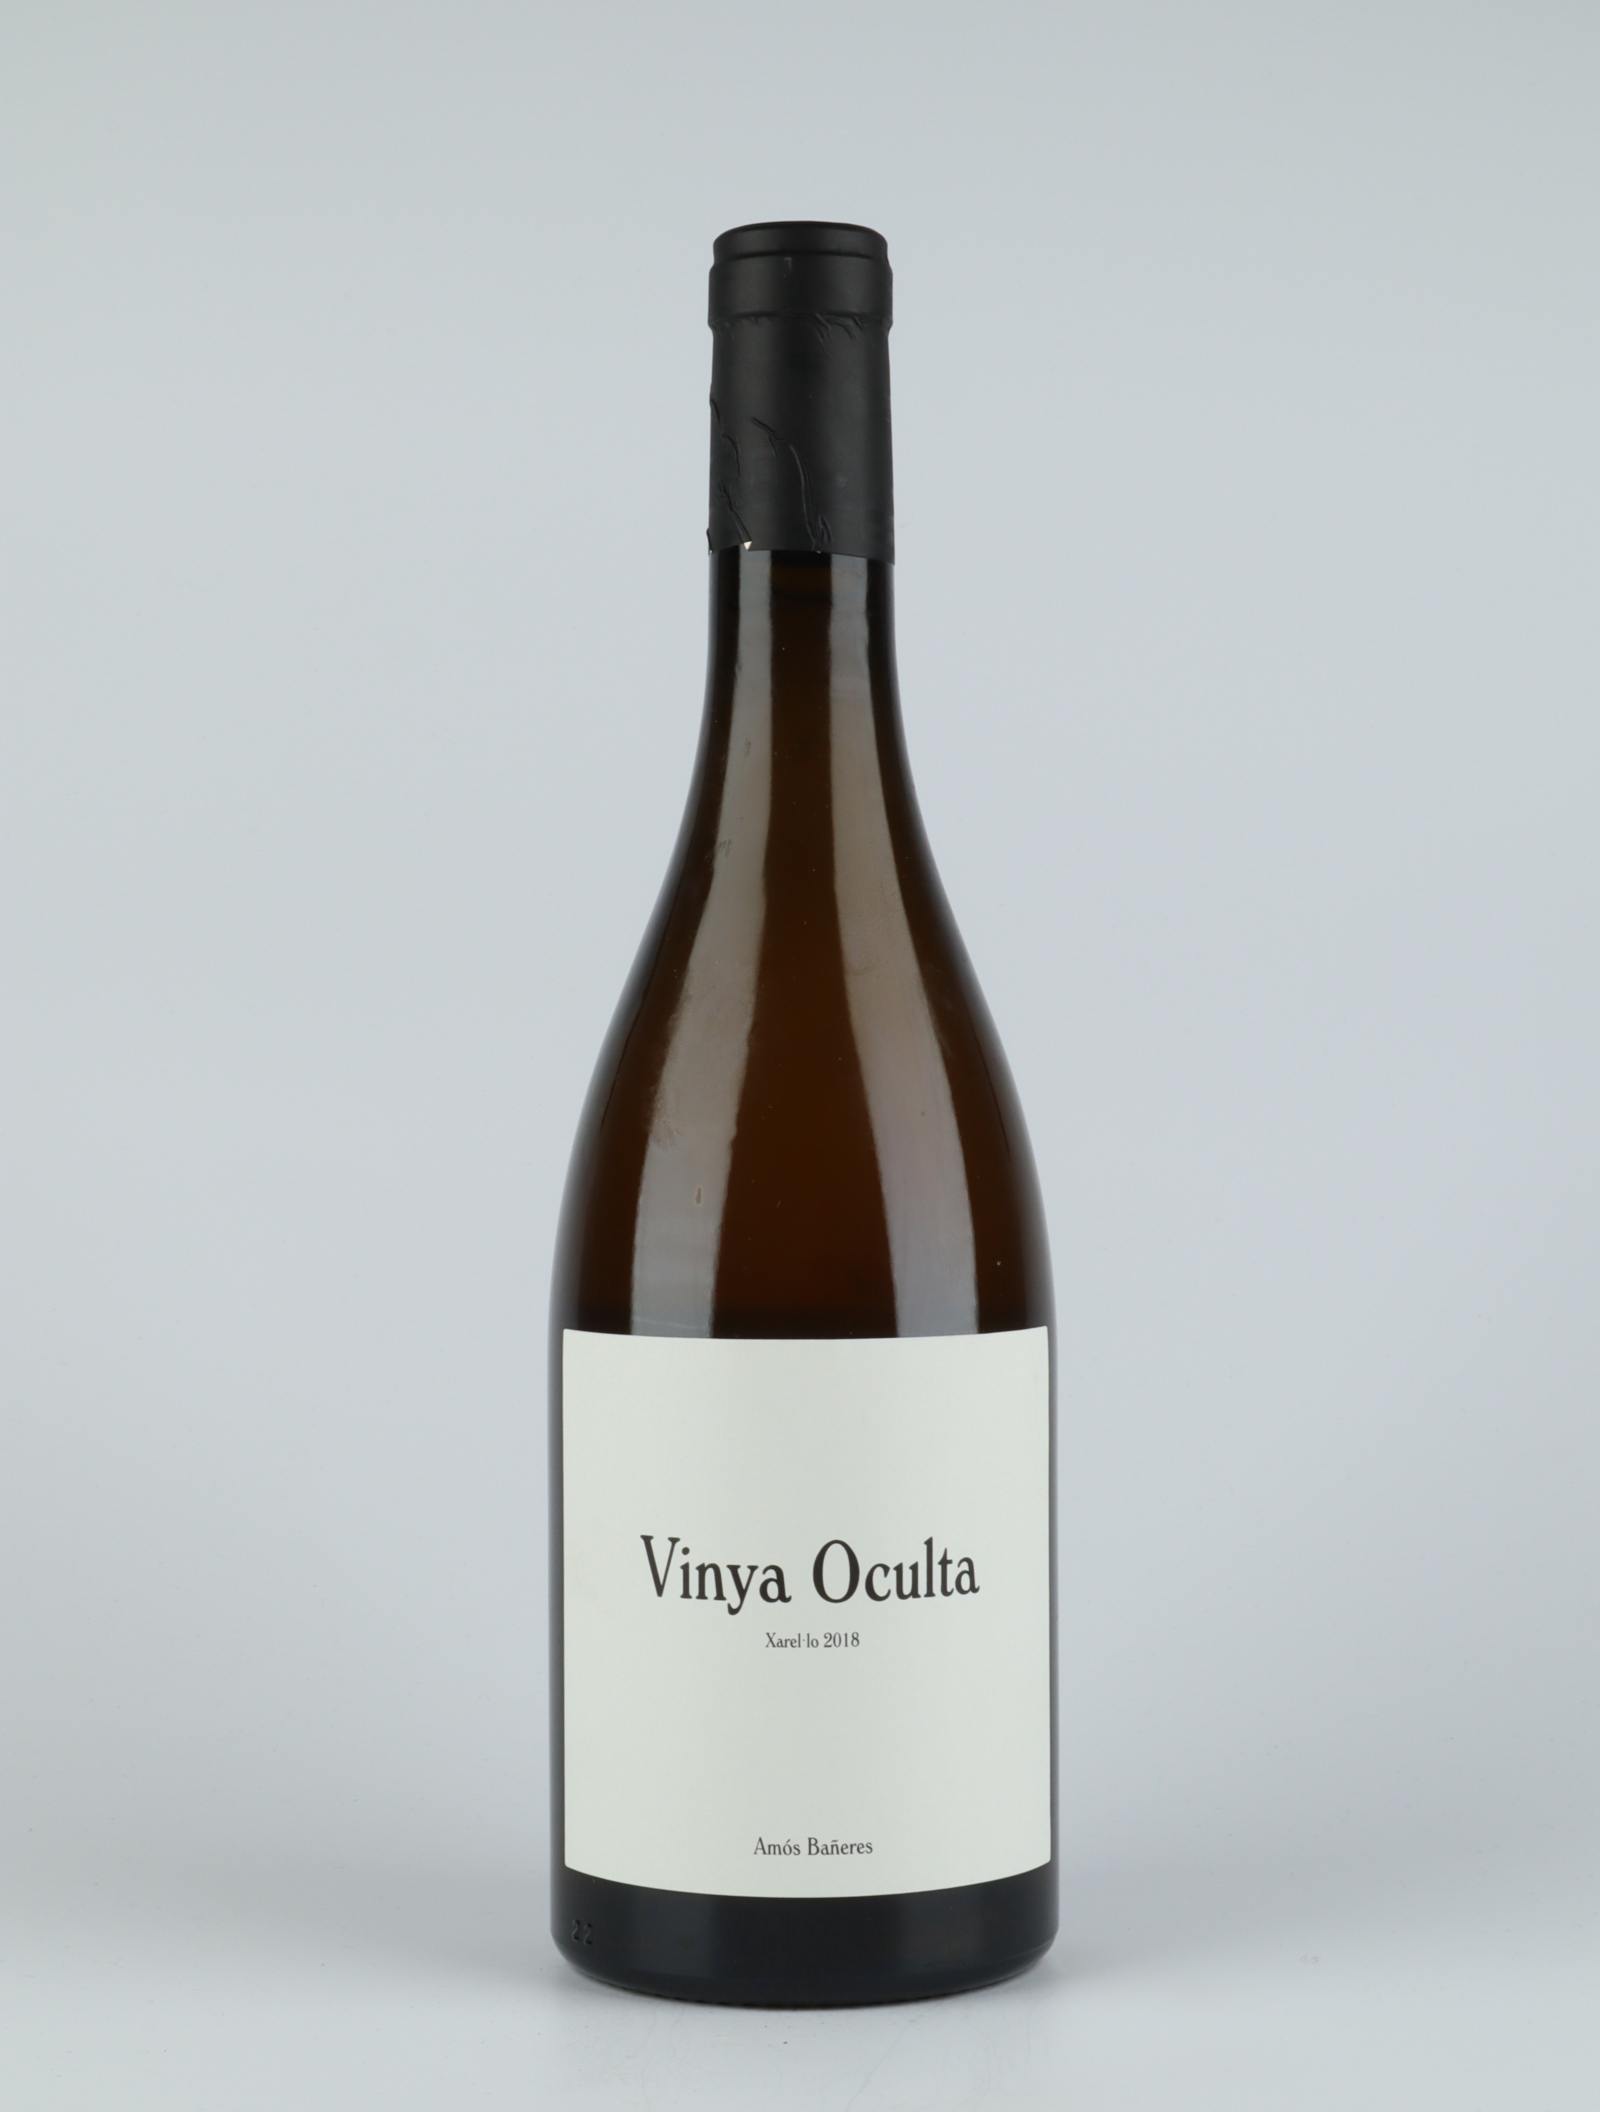 A bottle 2018 Vinya Oculta White wine from Amós Bañeres, Penedès in Spain